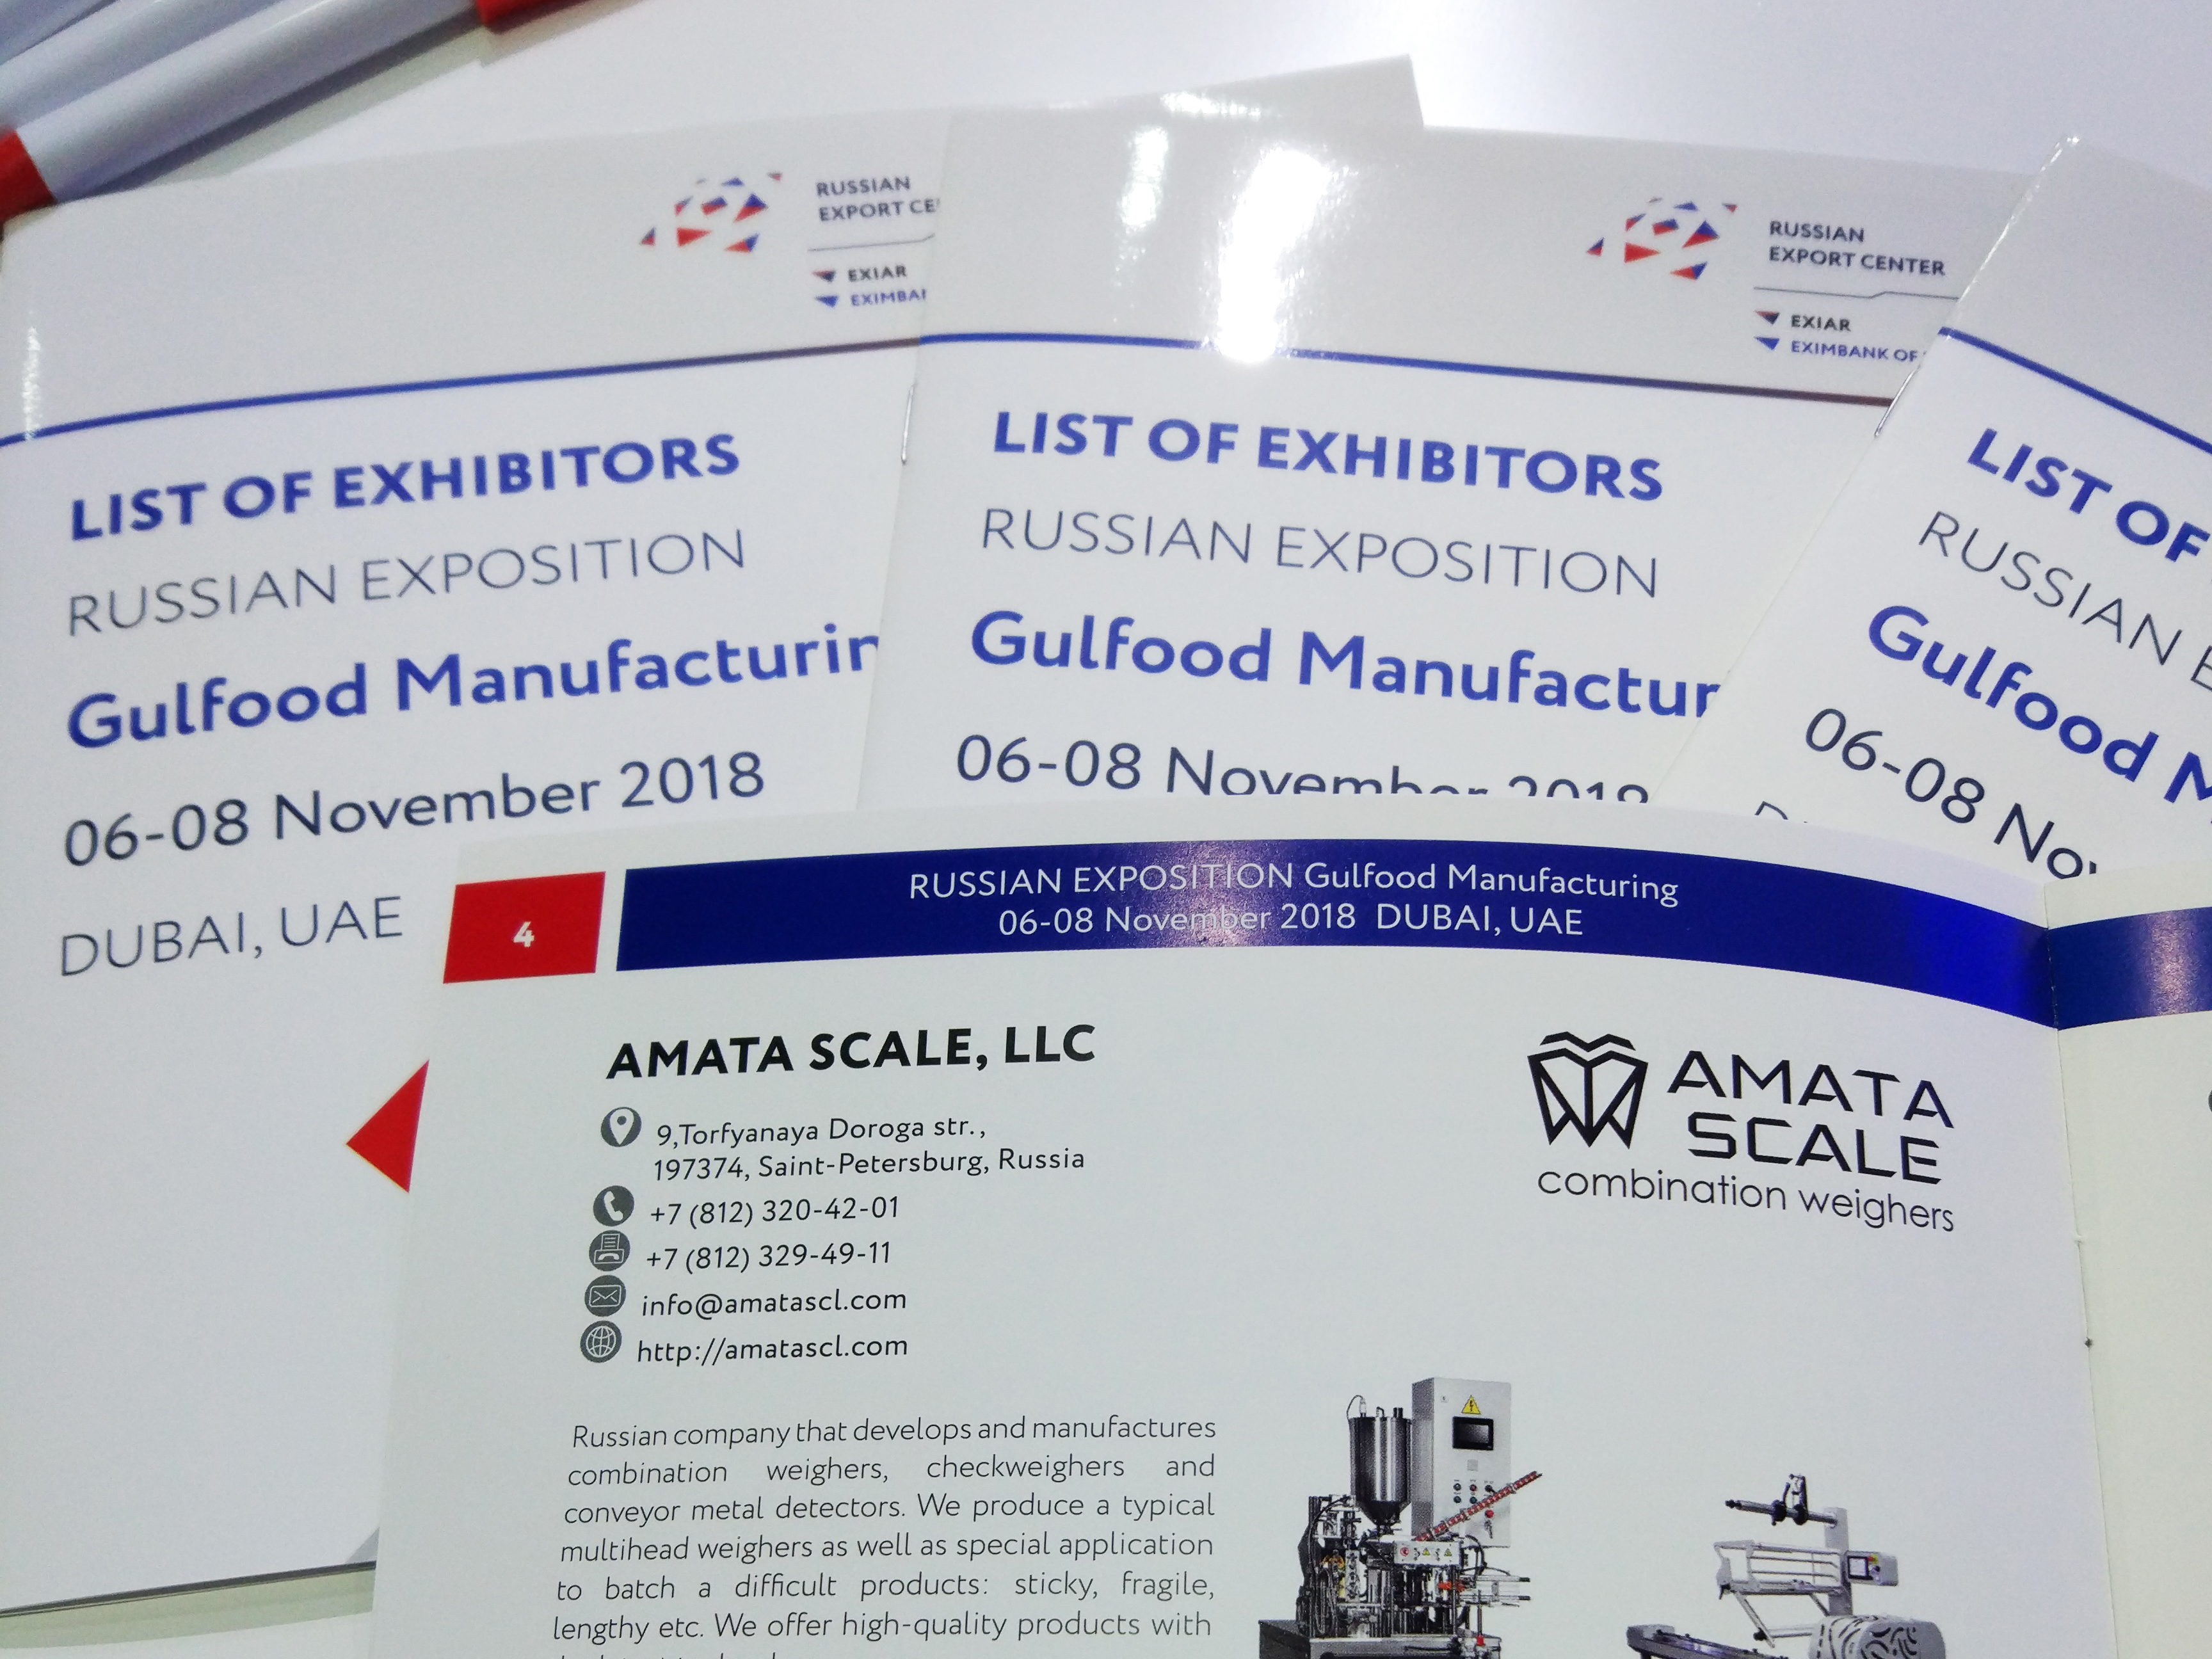 Gulfood Manufacturing 2018 AMATA SCALE